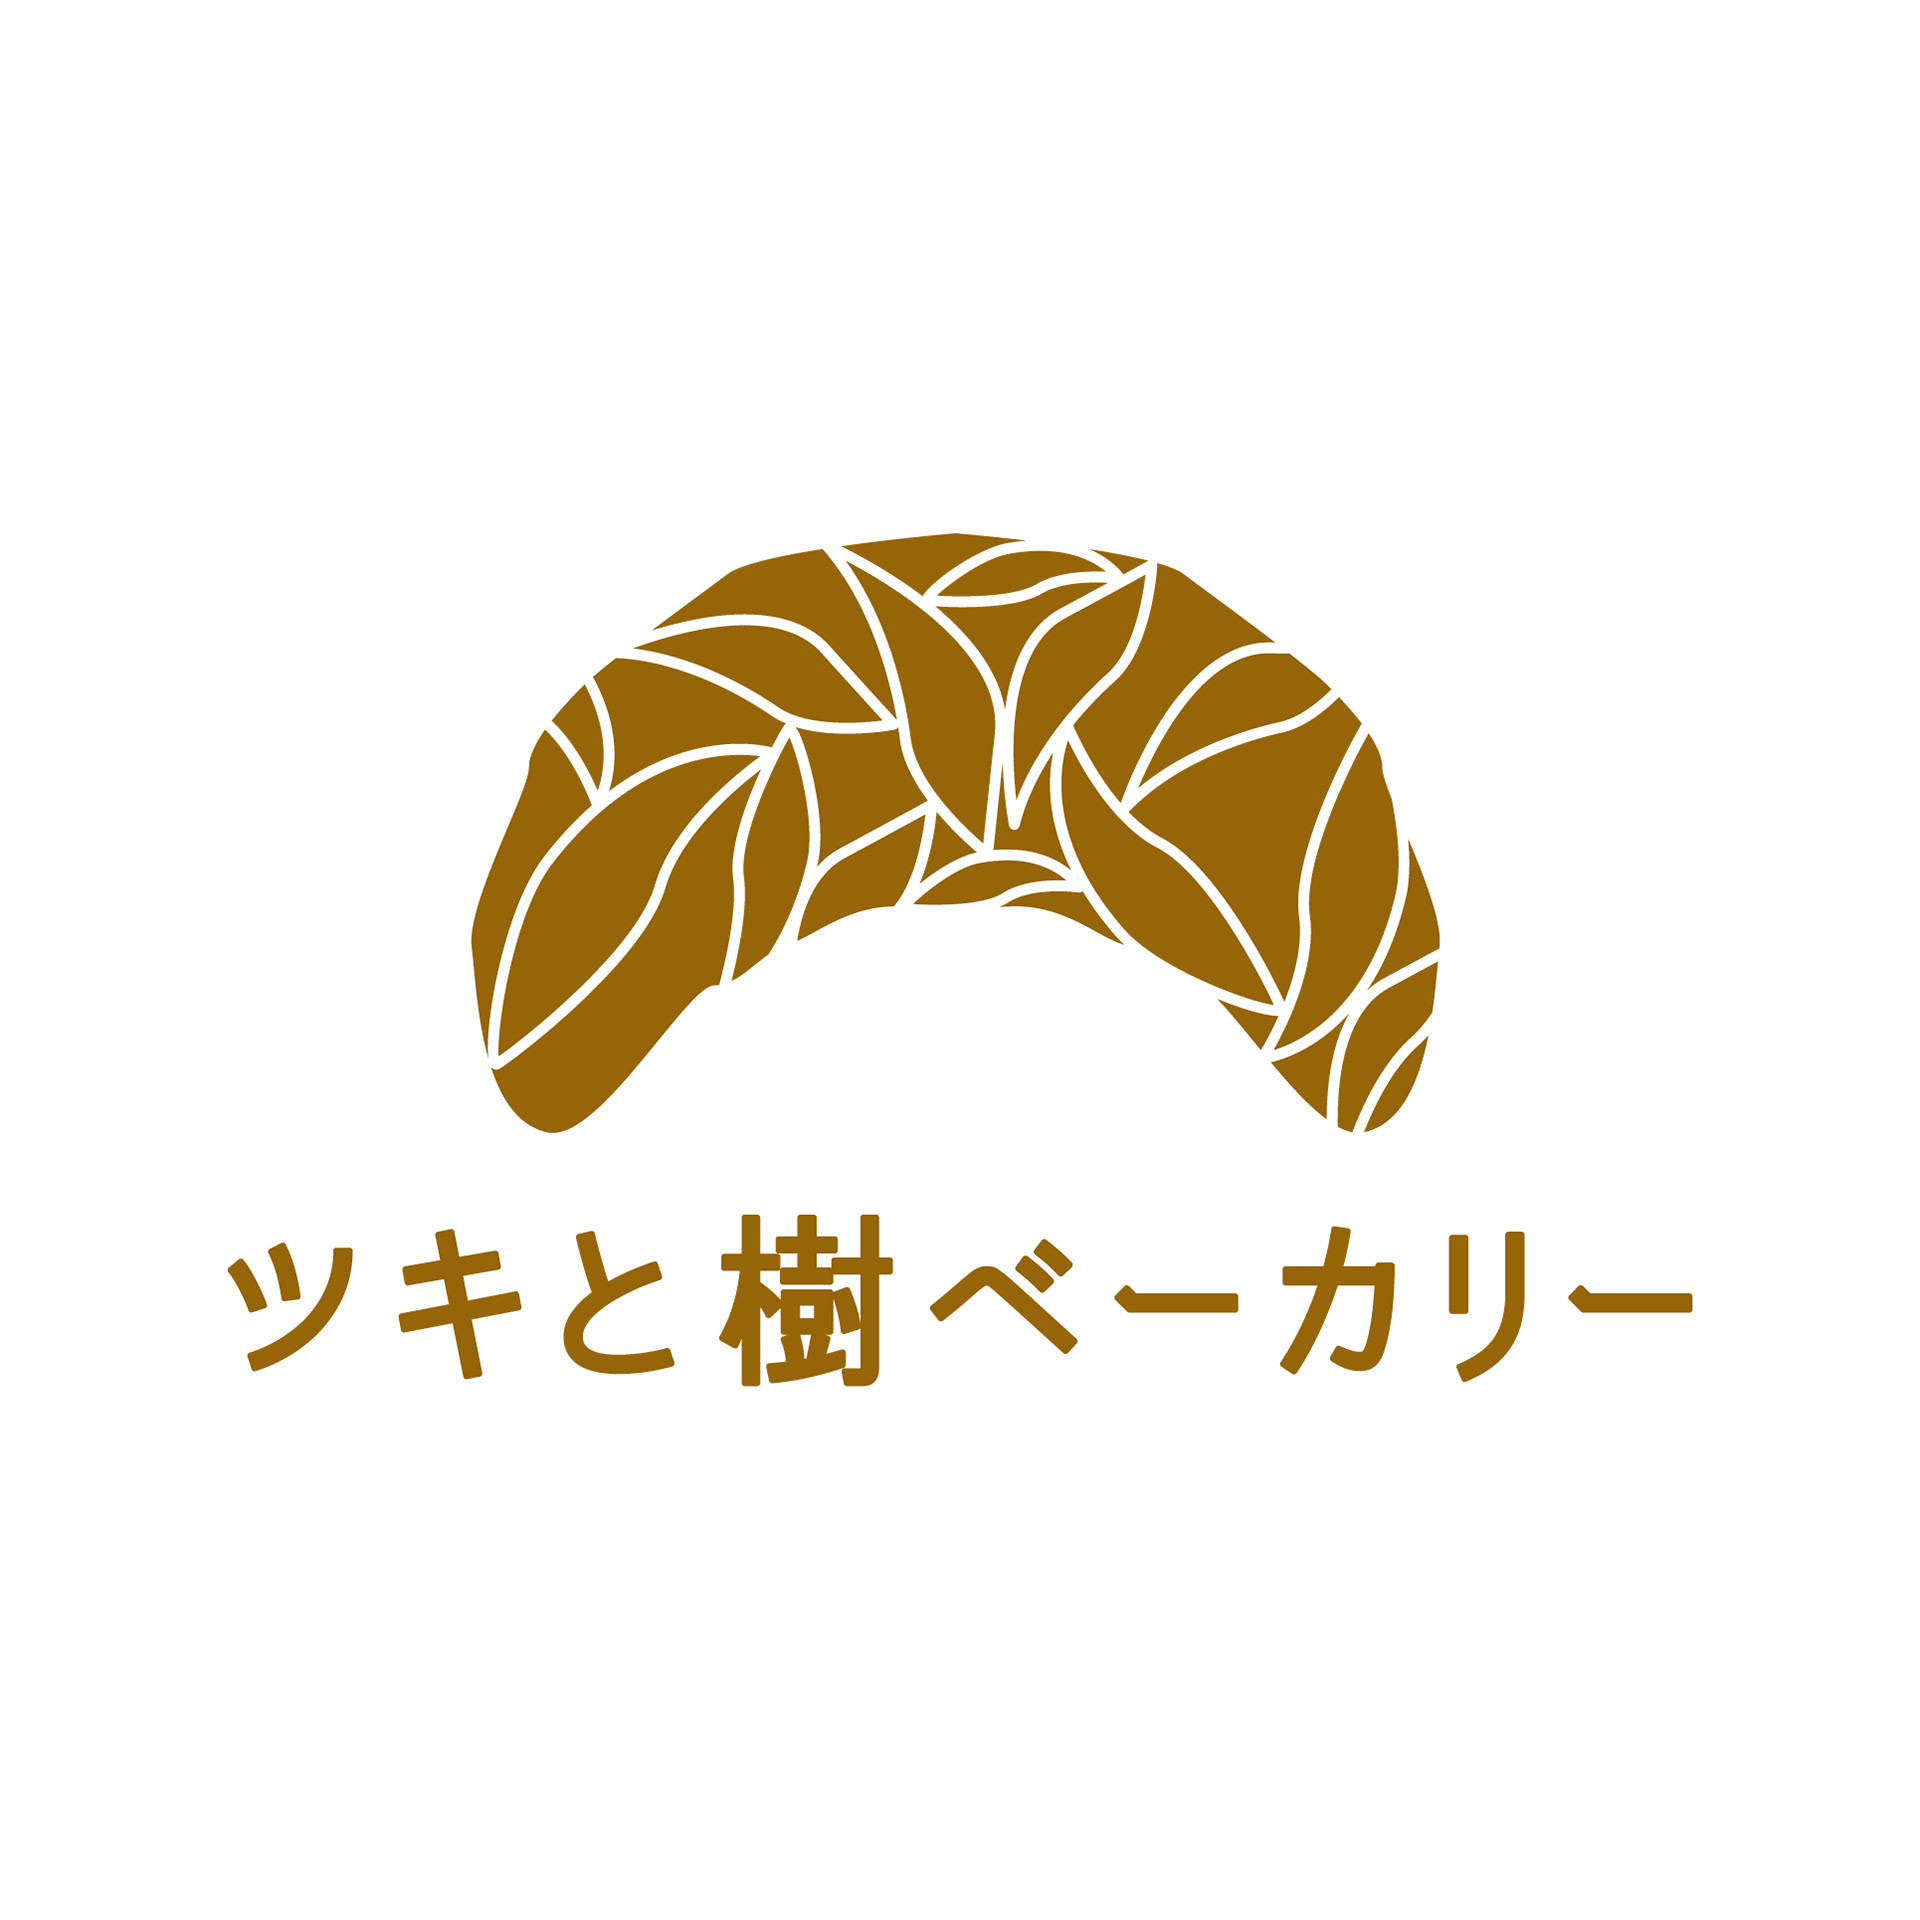 Yukiko Hatai ツキと樹ベーカリー ロゴ